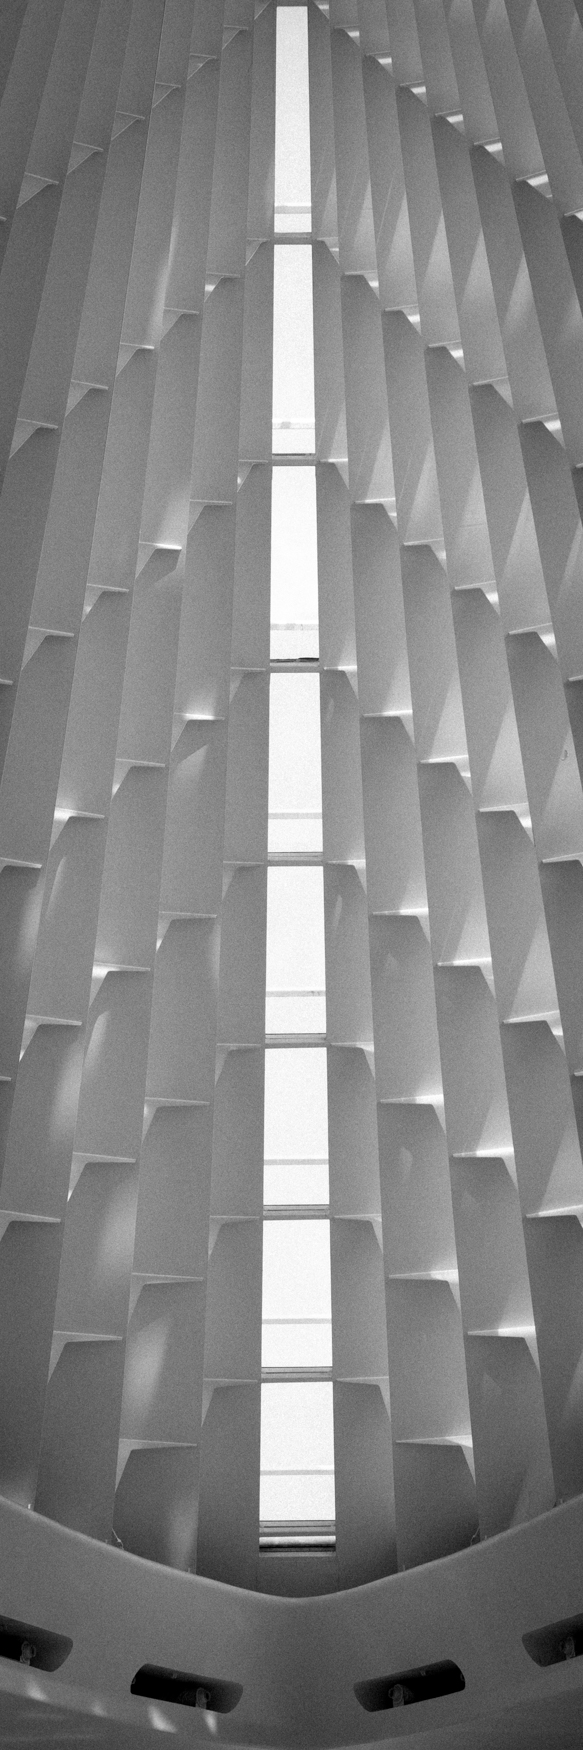 Windhover Hall detail, Milwaukee Art Museum, Santiago Calatrava